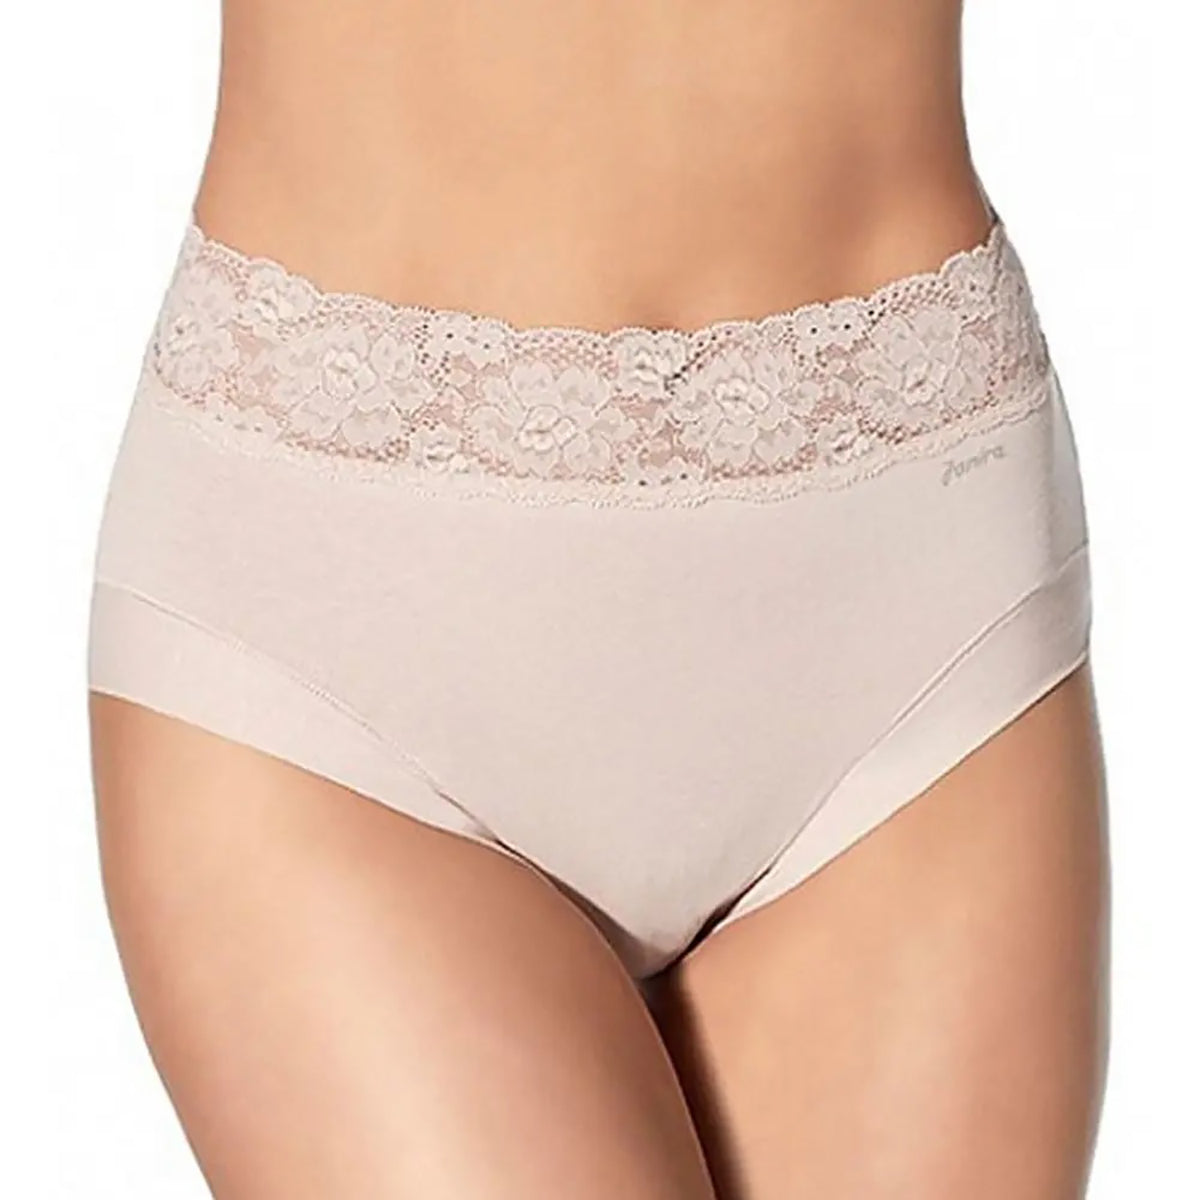 Ladies underwear woman panties fancy lace calcinha renda sexy panties for  women traceless crotch of cotton briefs hot sale